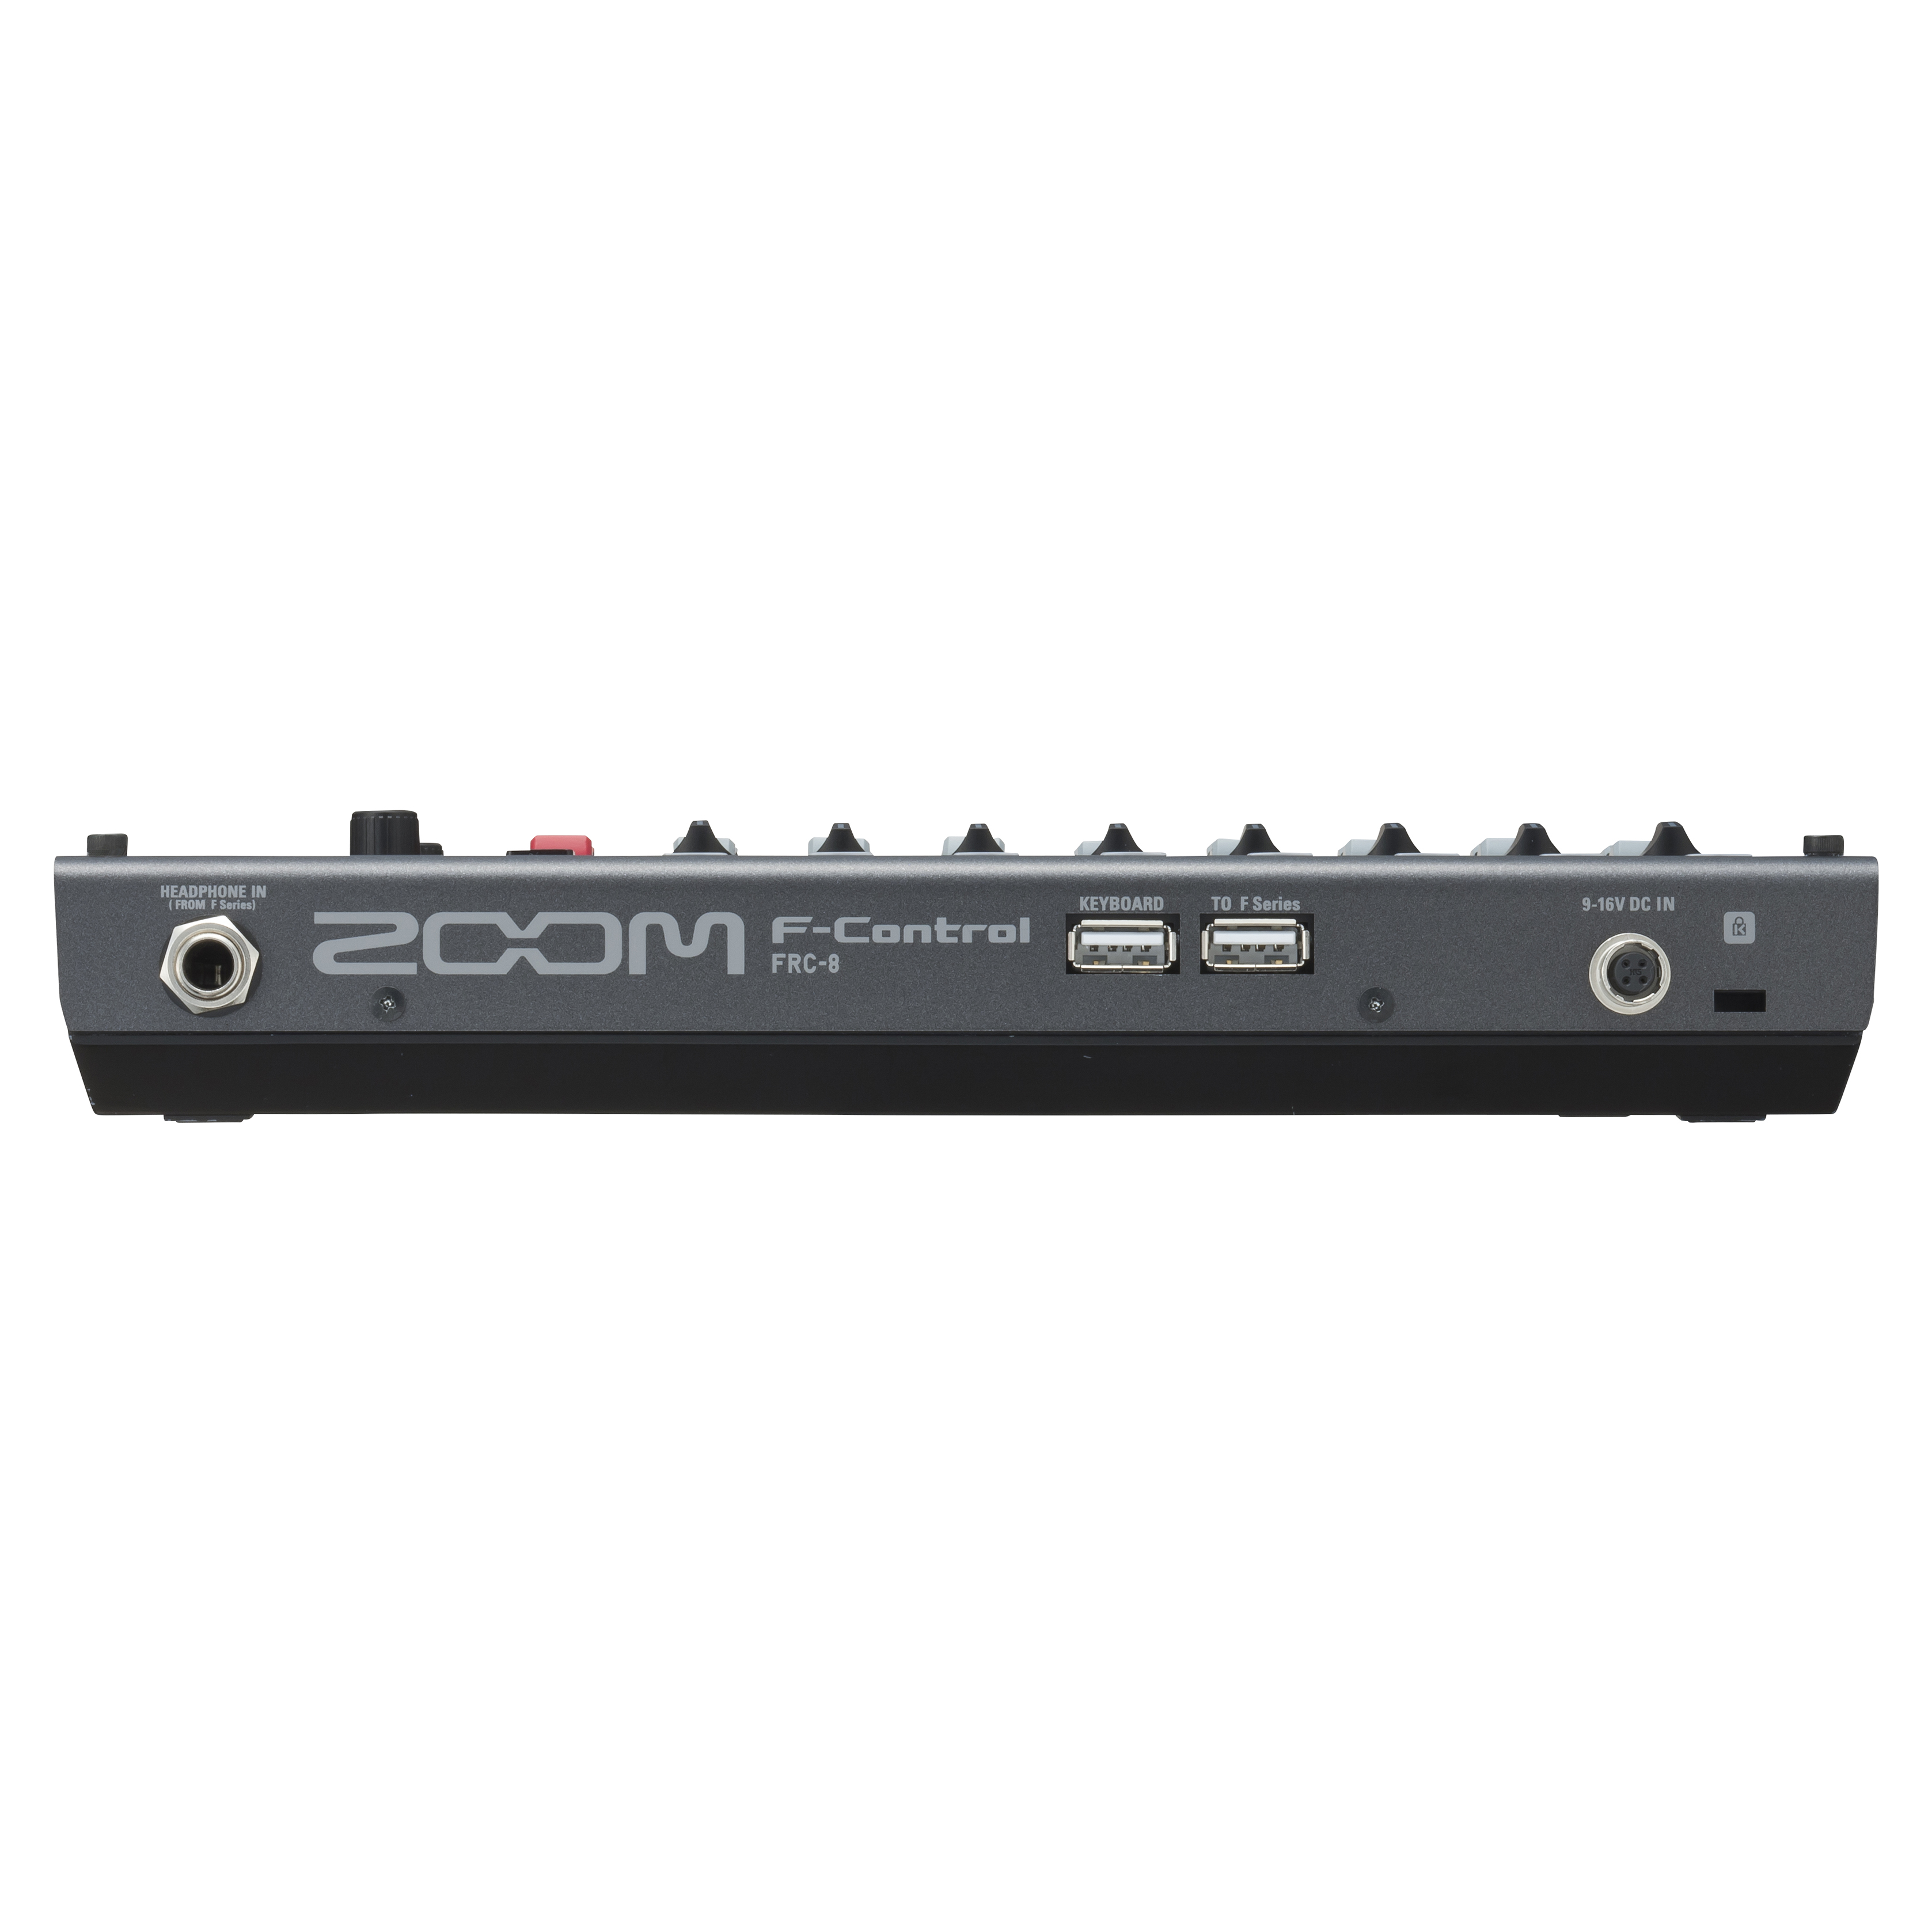 Zoom F-control Frc-8 - Enregistreur Multi-pistes - Variation 2